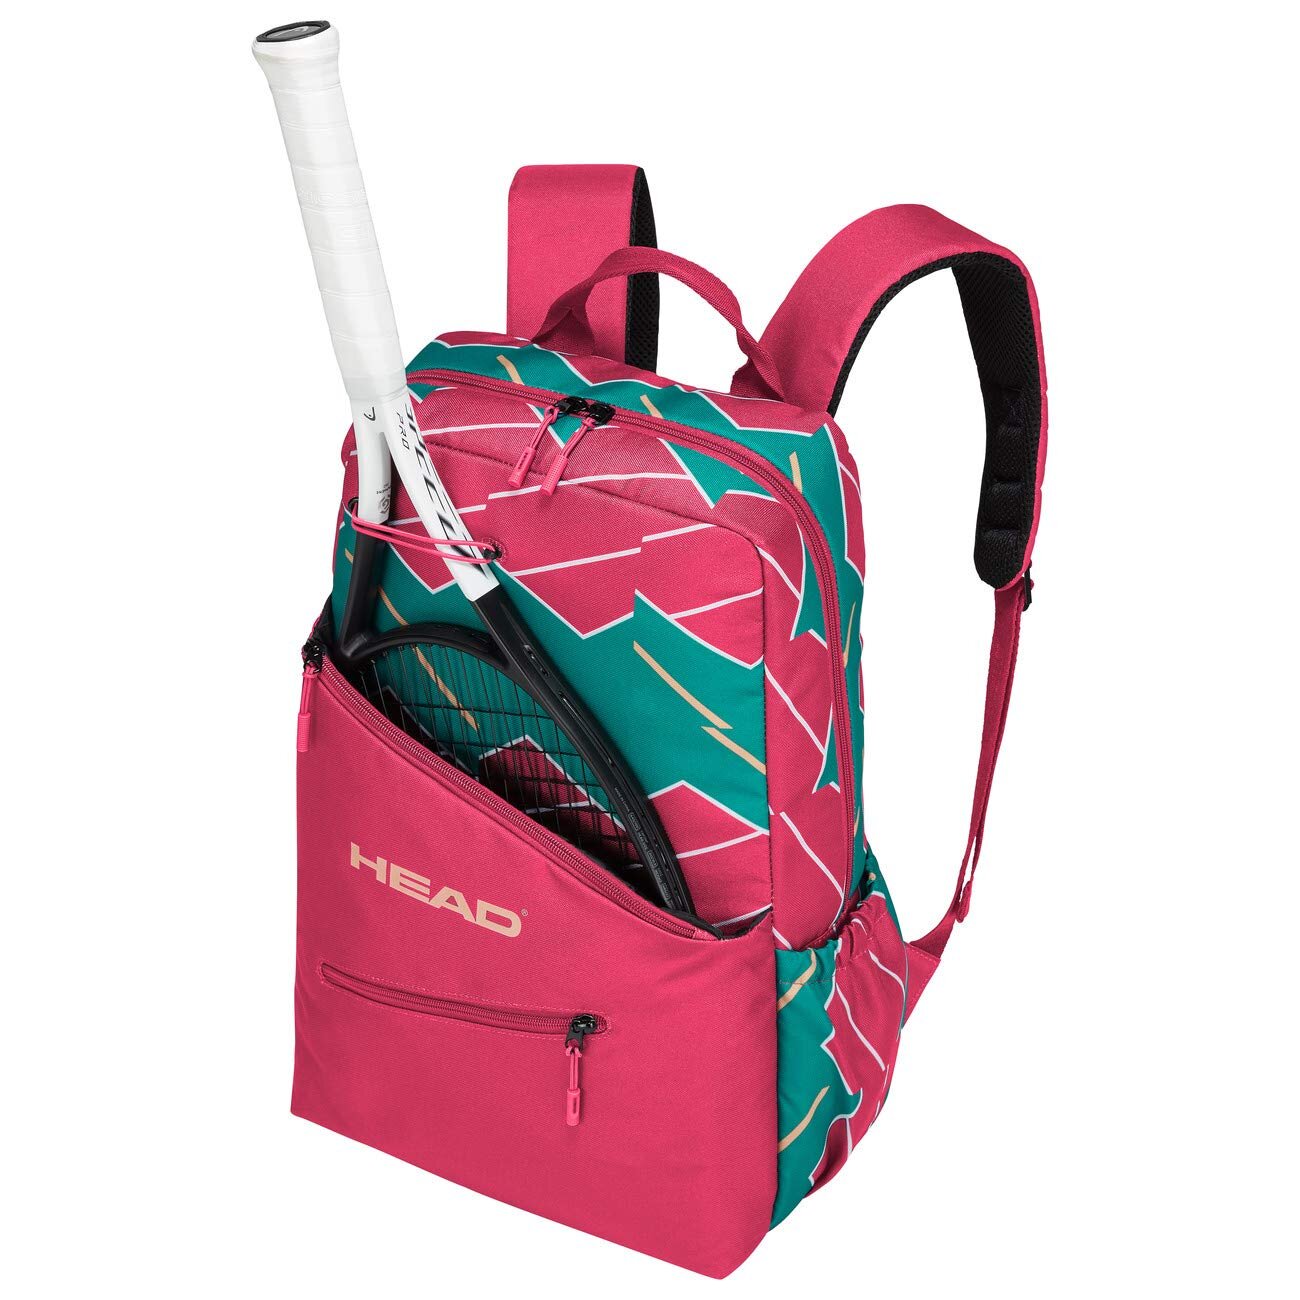 Head Womens Backpack Pinkgreen Unisex Adult Racket Bag, One Size